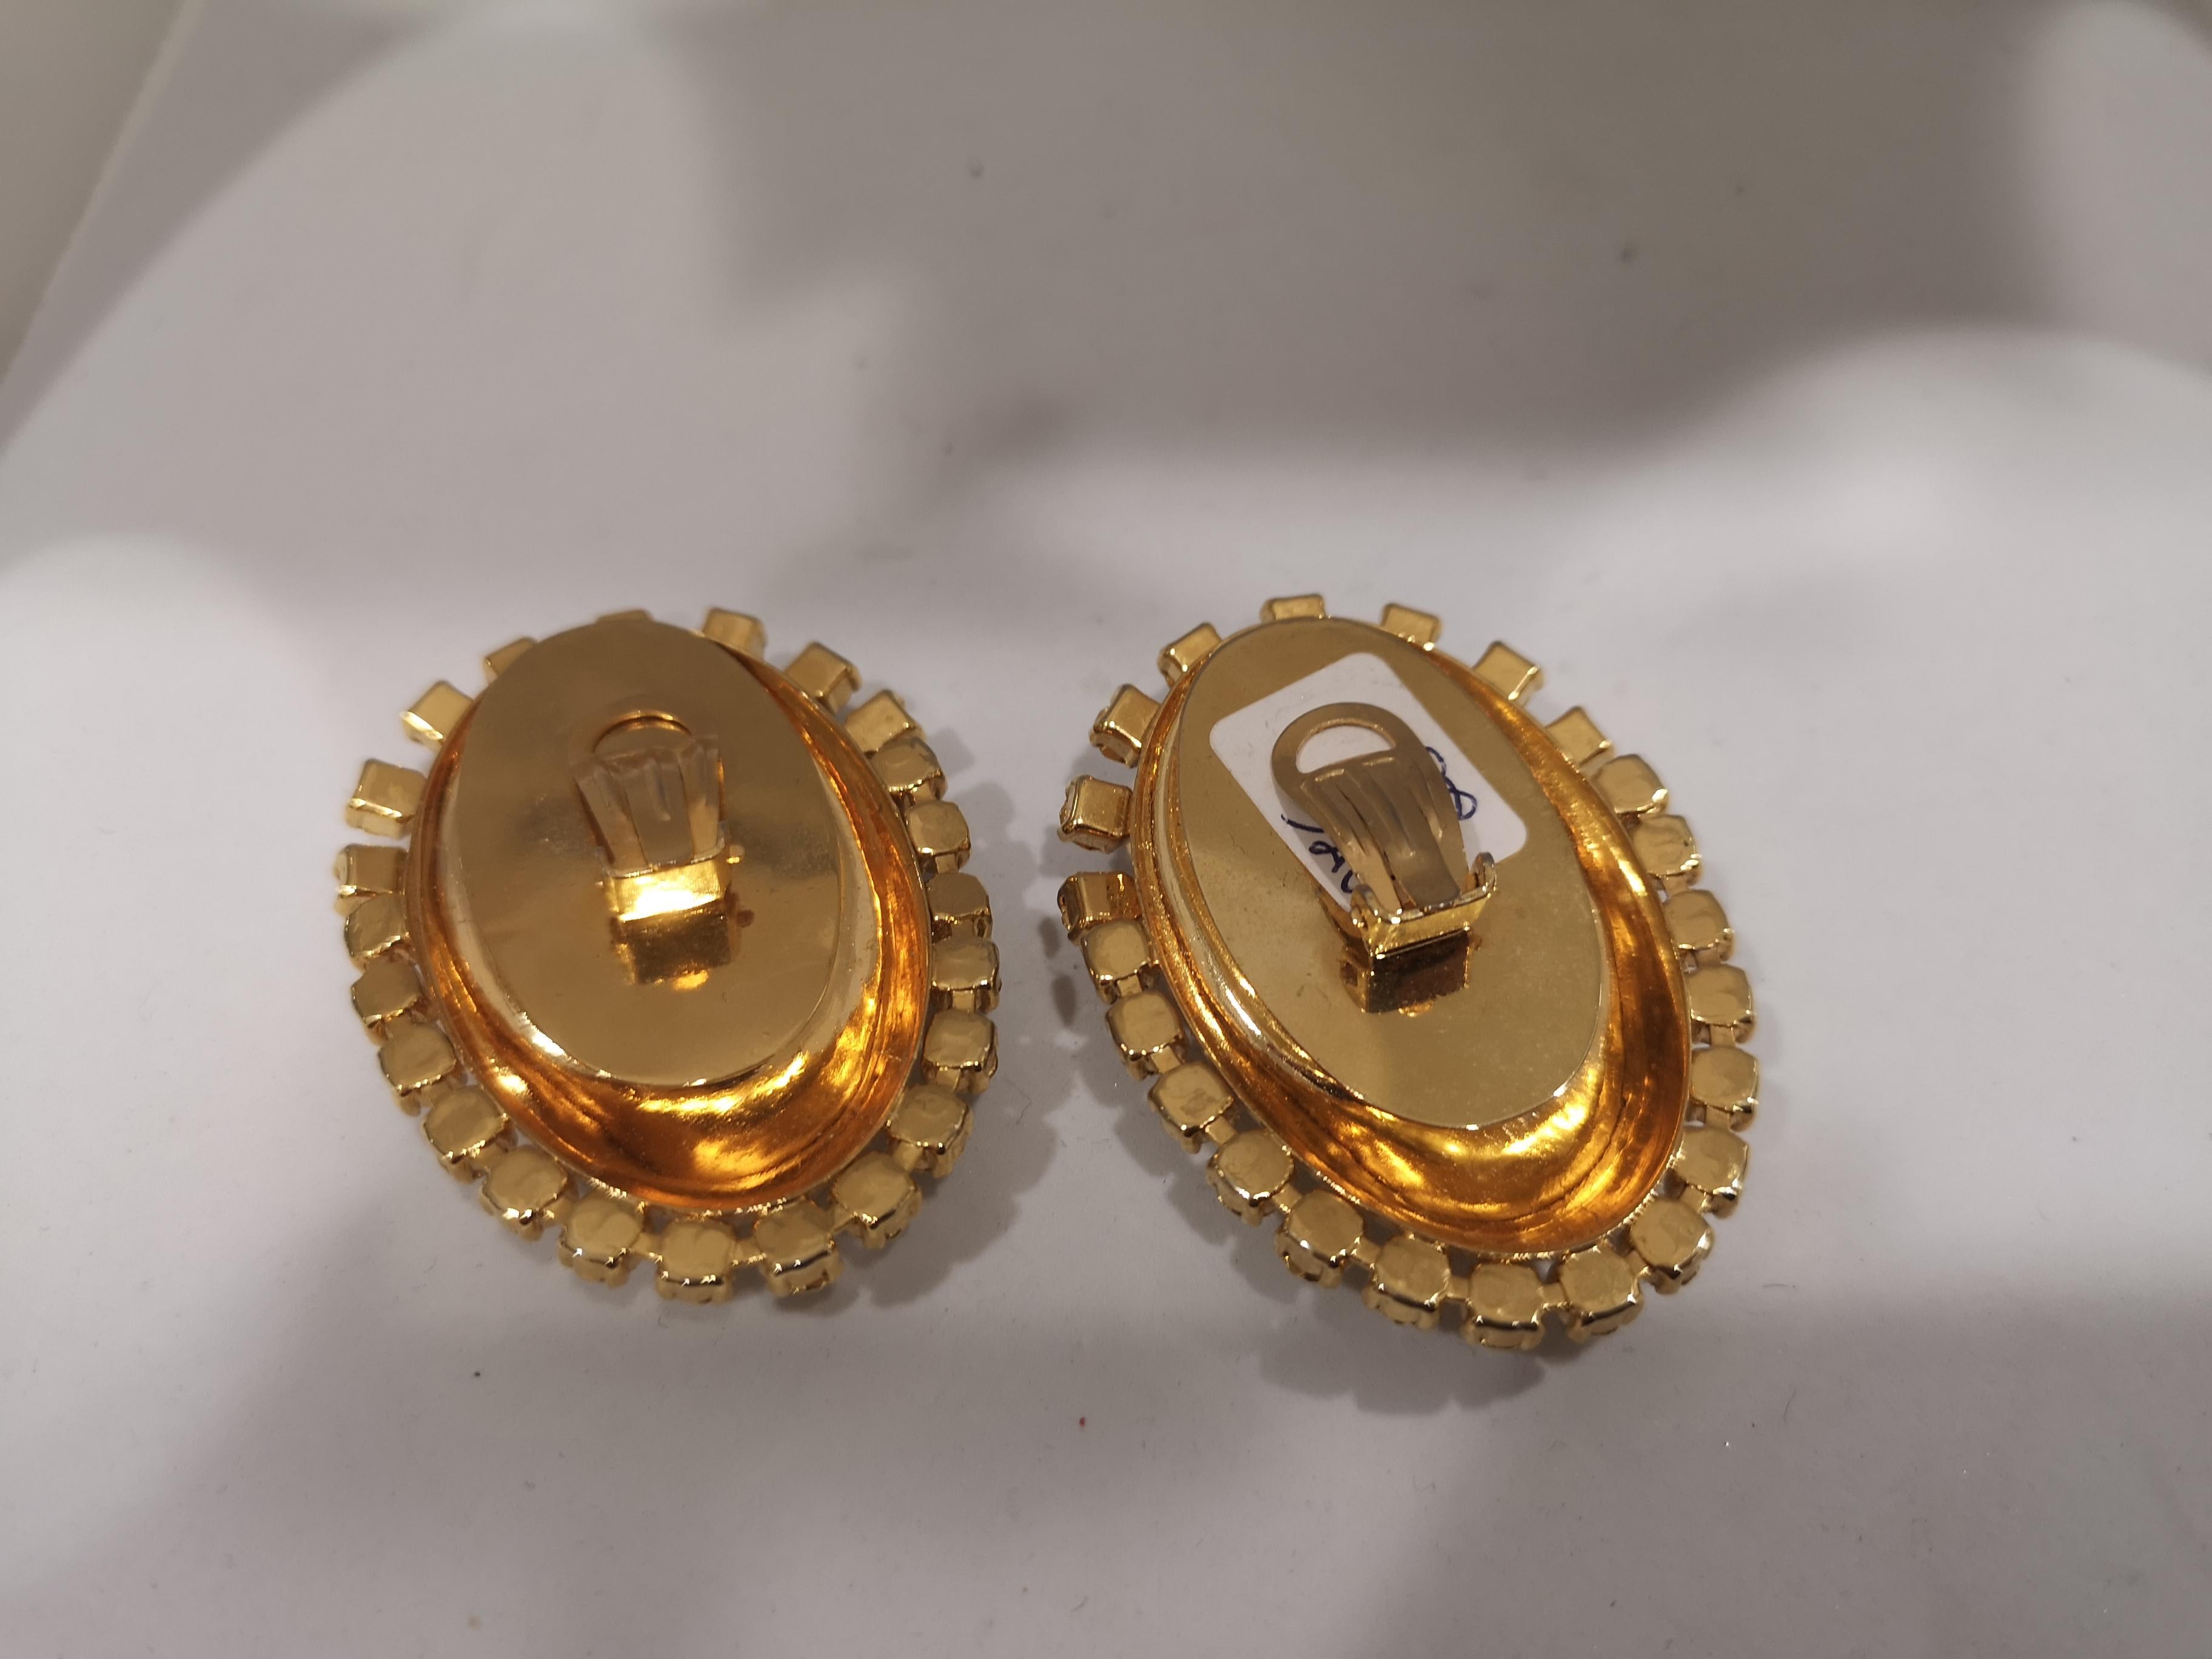 Vintage gold tone swarovski and stone pendant clip on earrings
6x4 cm